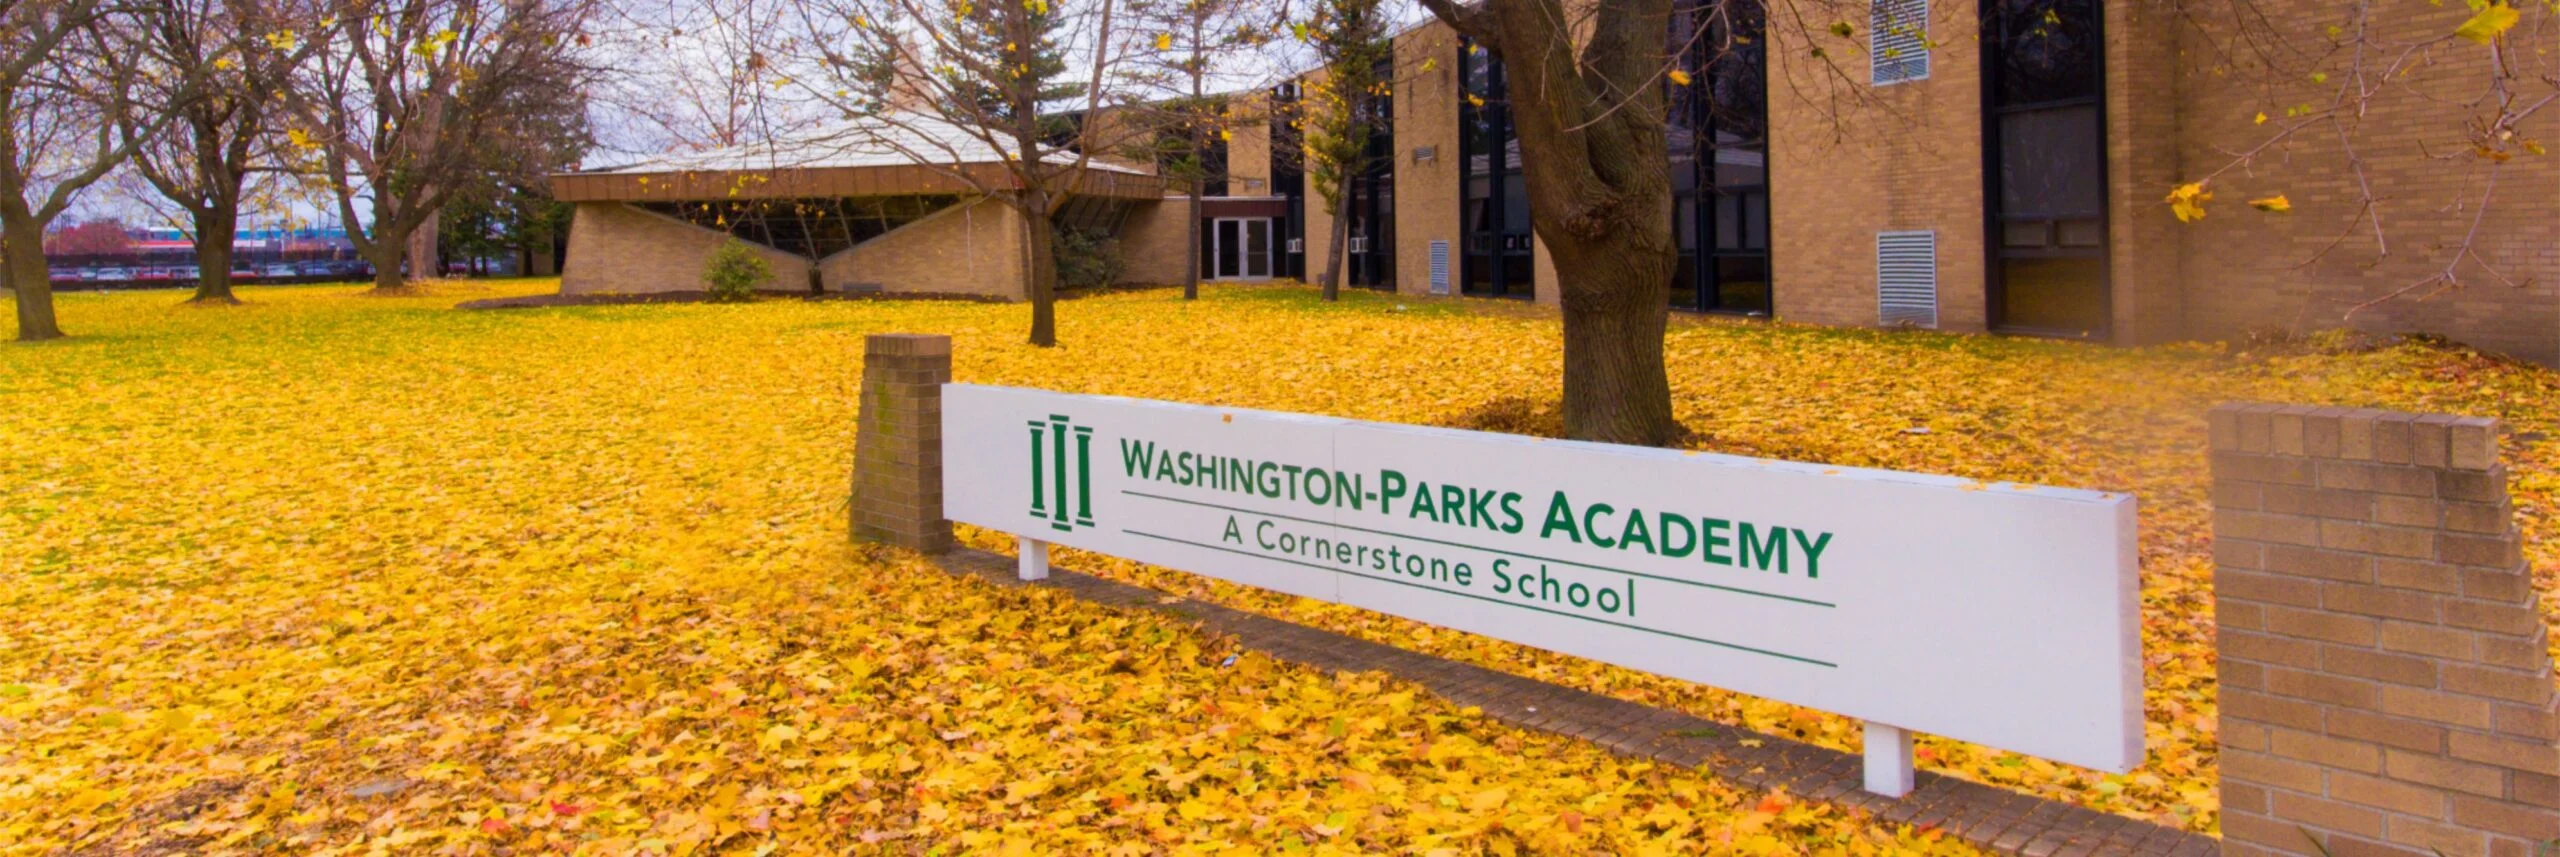 WashingtonParks Academy Cornerstone Schools